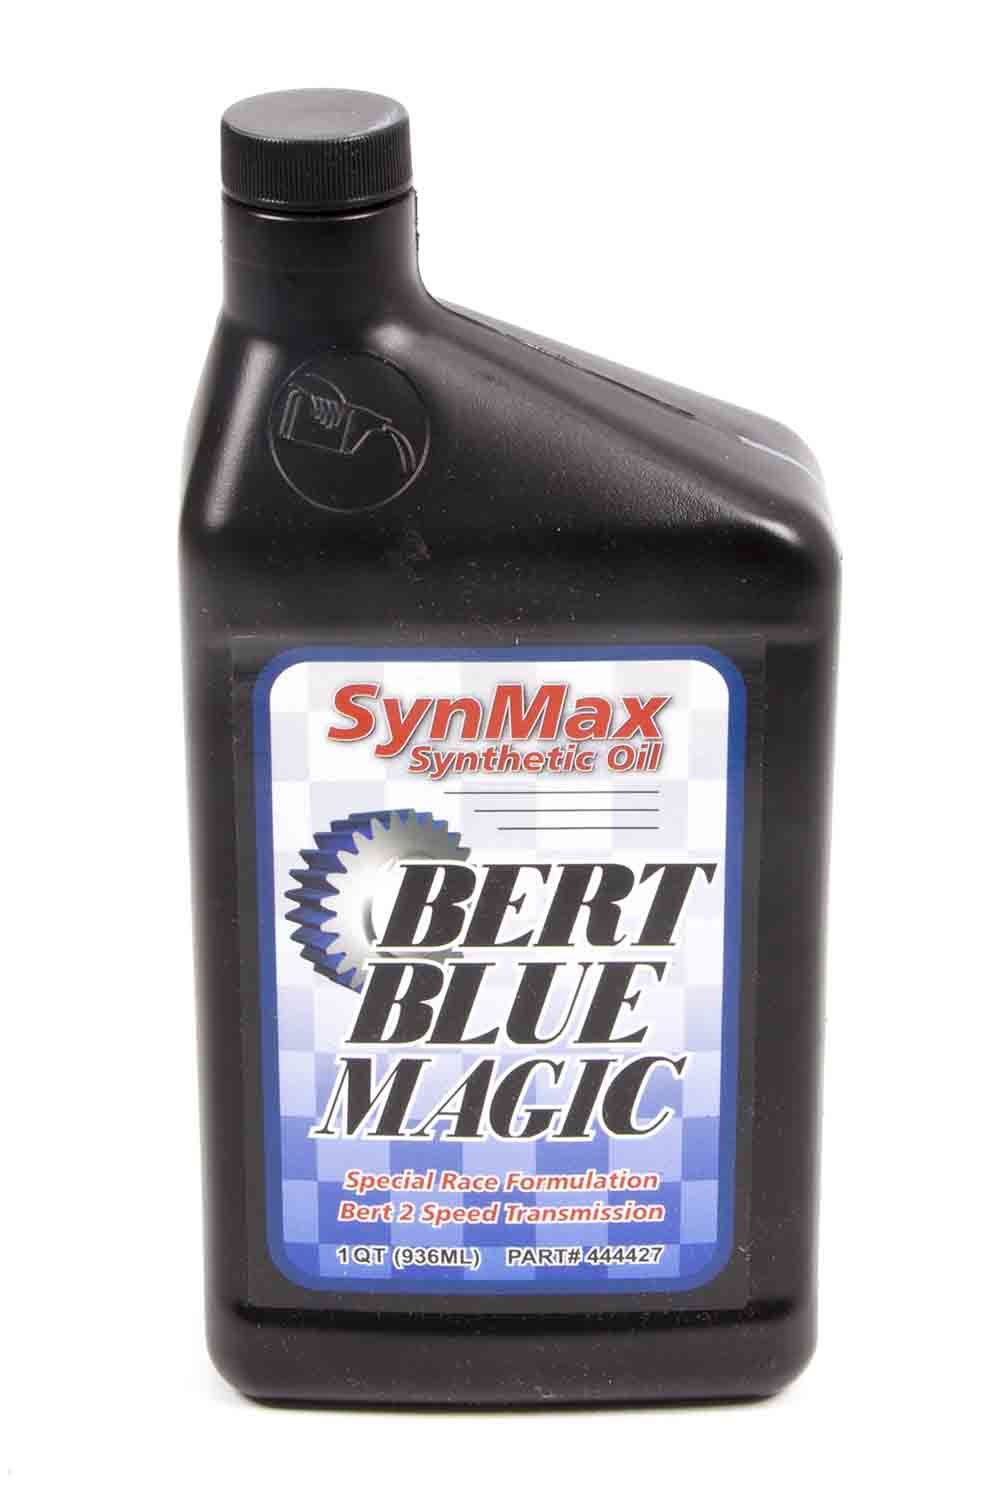 Bert Transmissions 4444275 Transmission Fluid, Blue Magic, Manual, Synthetic, 1 qt Bottle, Bert / Falcon Transmissions, Each